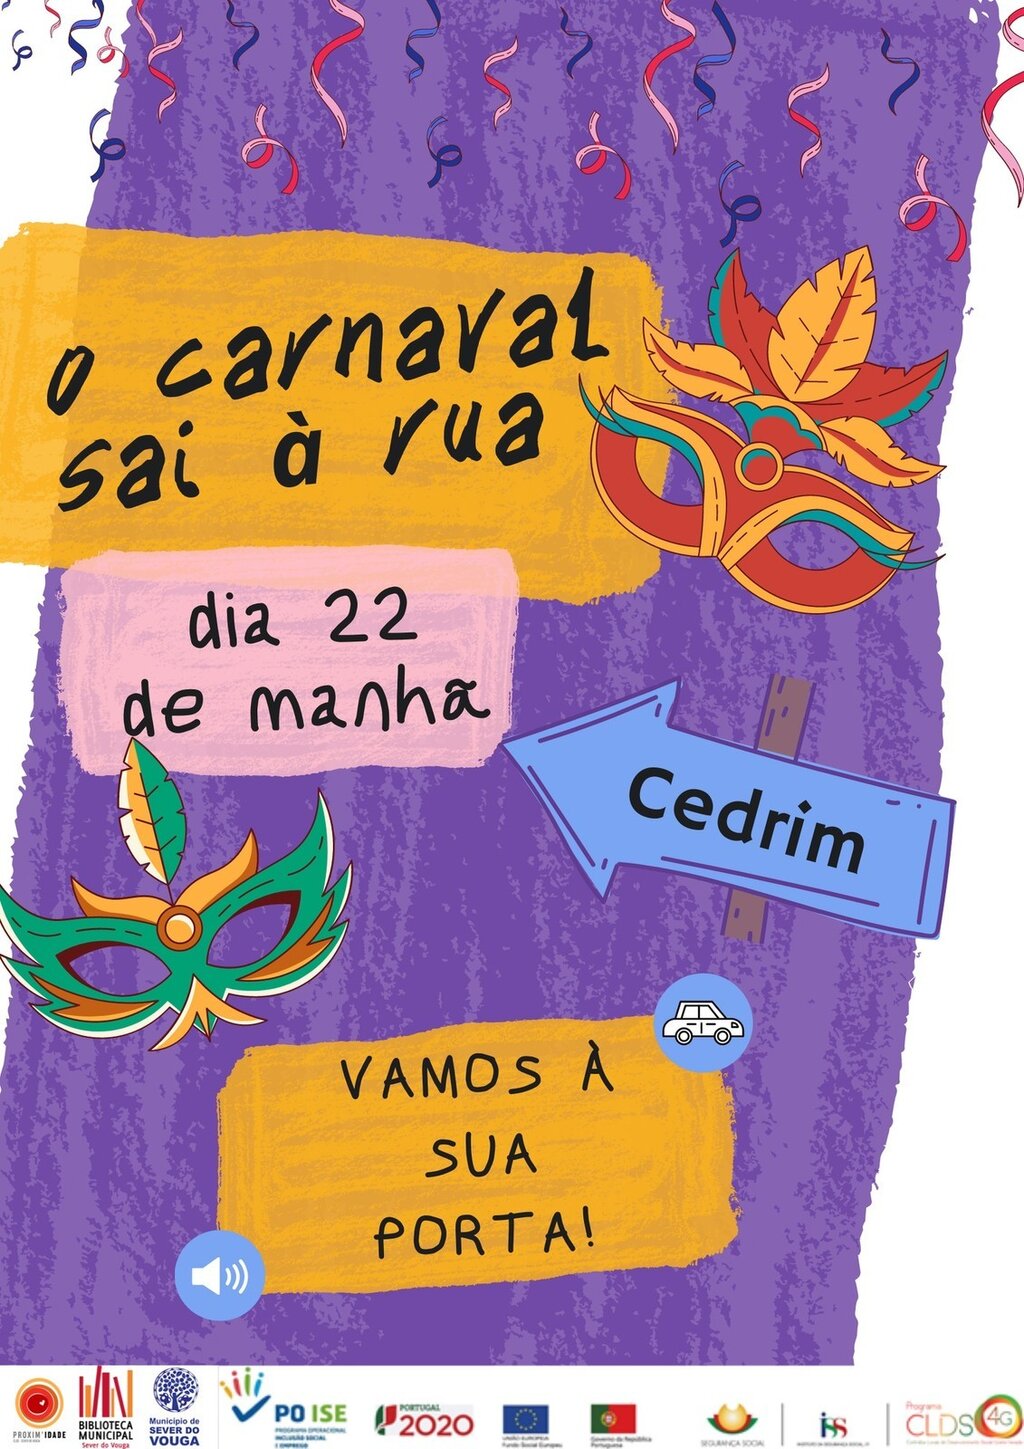 22 fev - o carnaval sai á rua - Cedrim